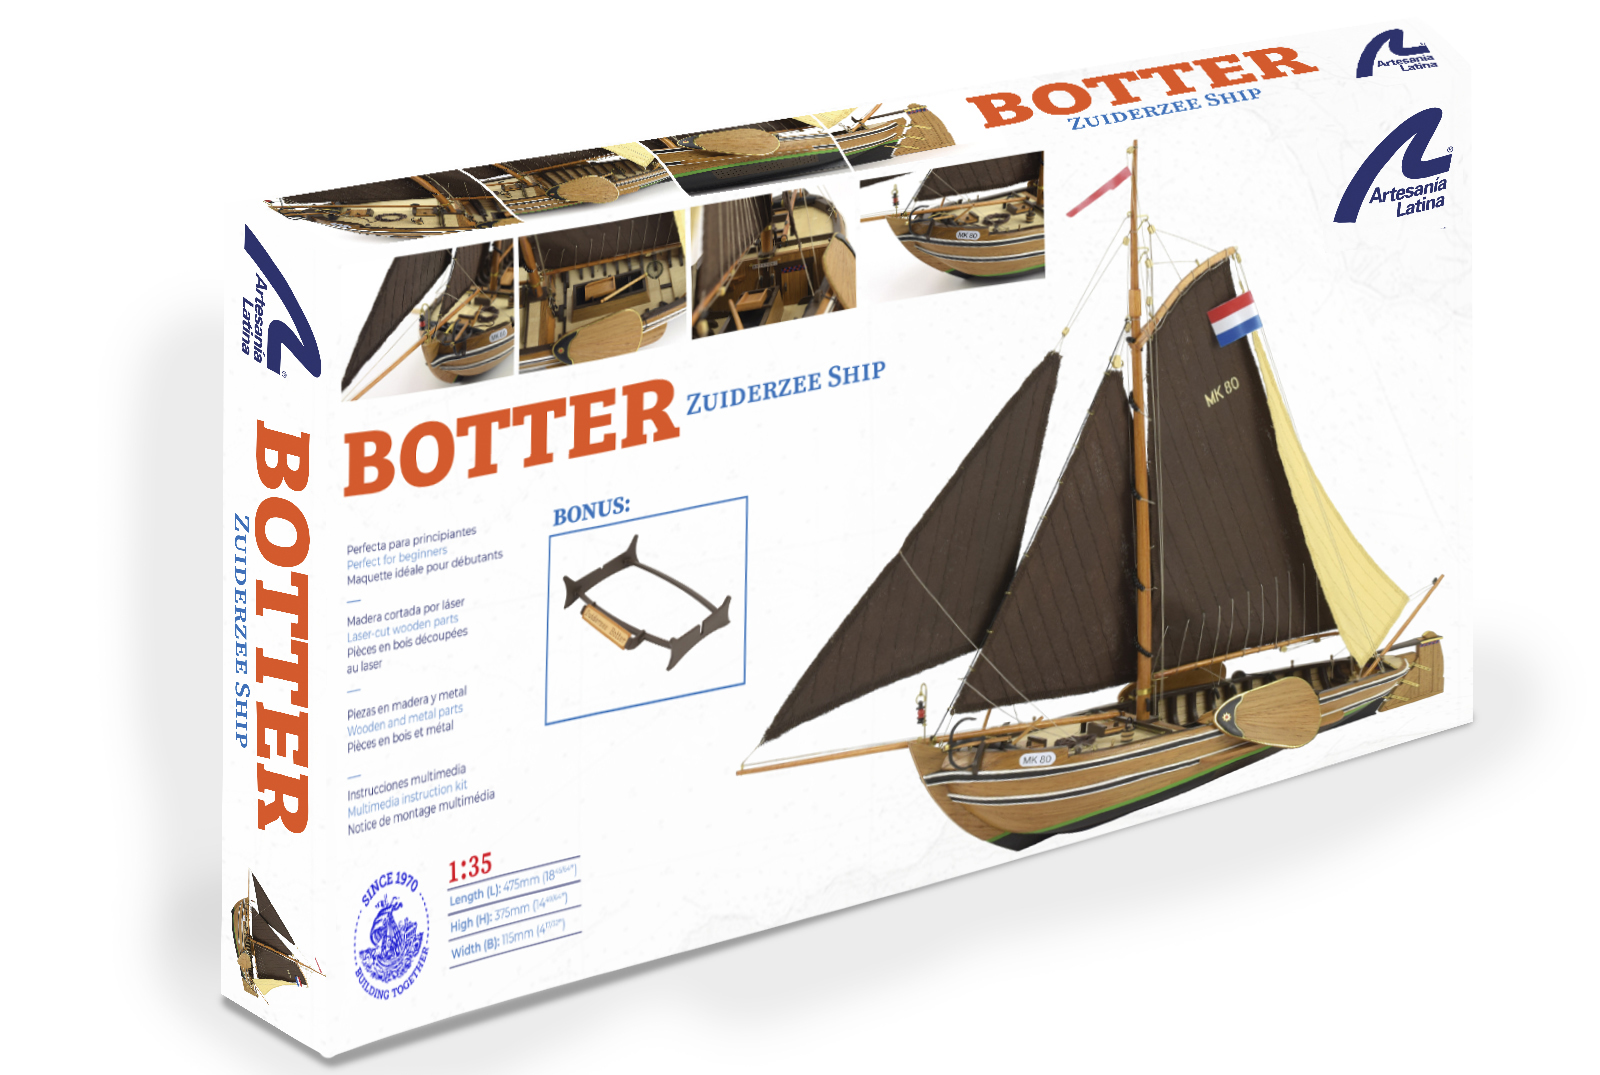 Fishing Ship Model. Dutch Boat Botter 1:35 (22125) made by Artesanía Latina.